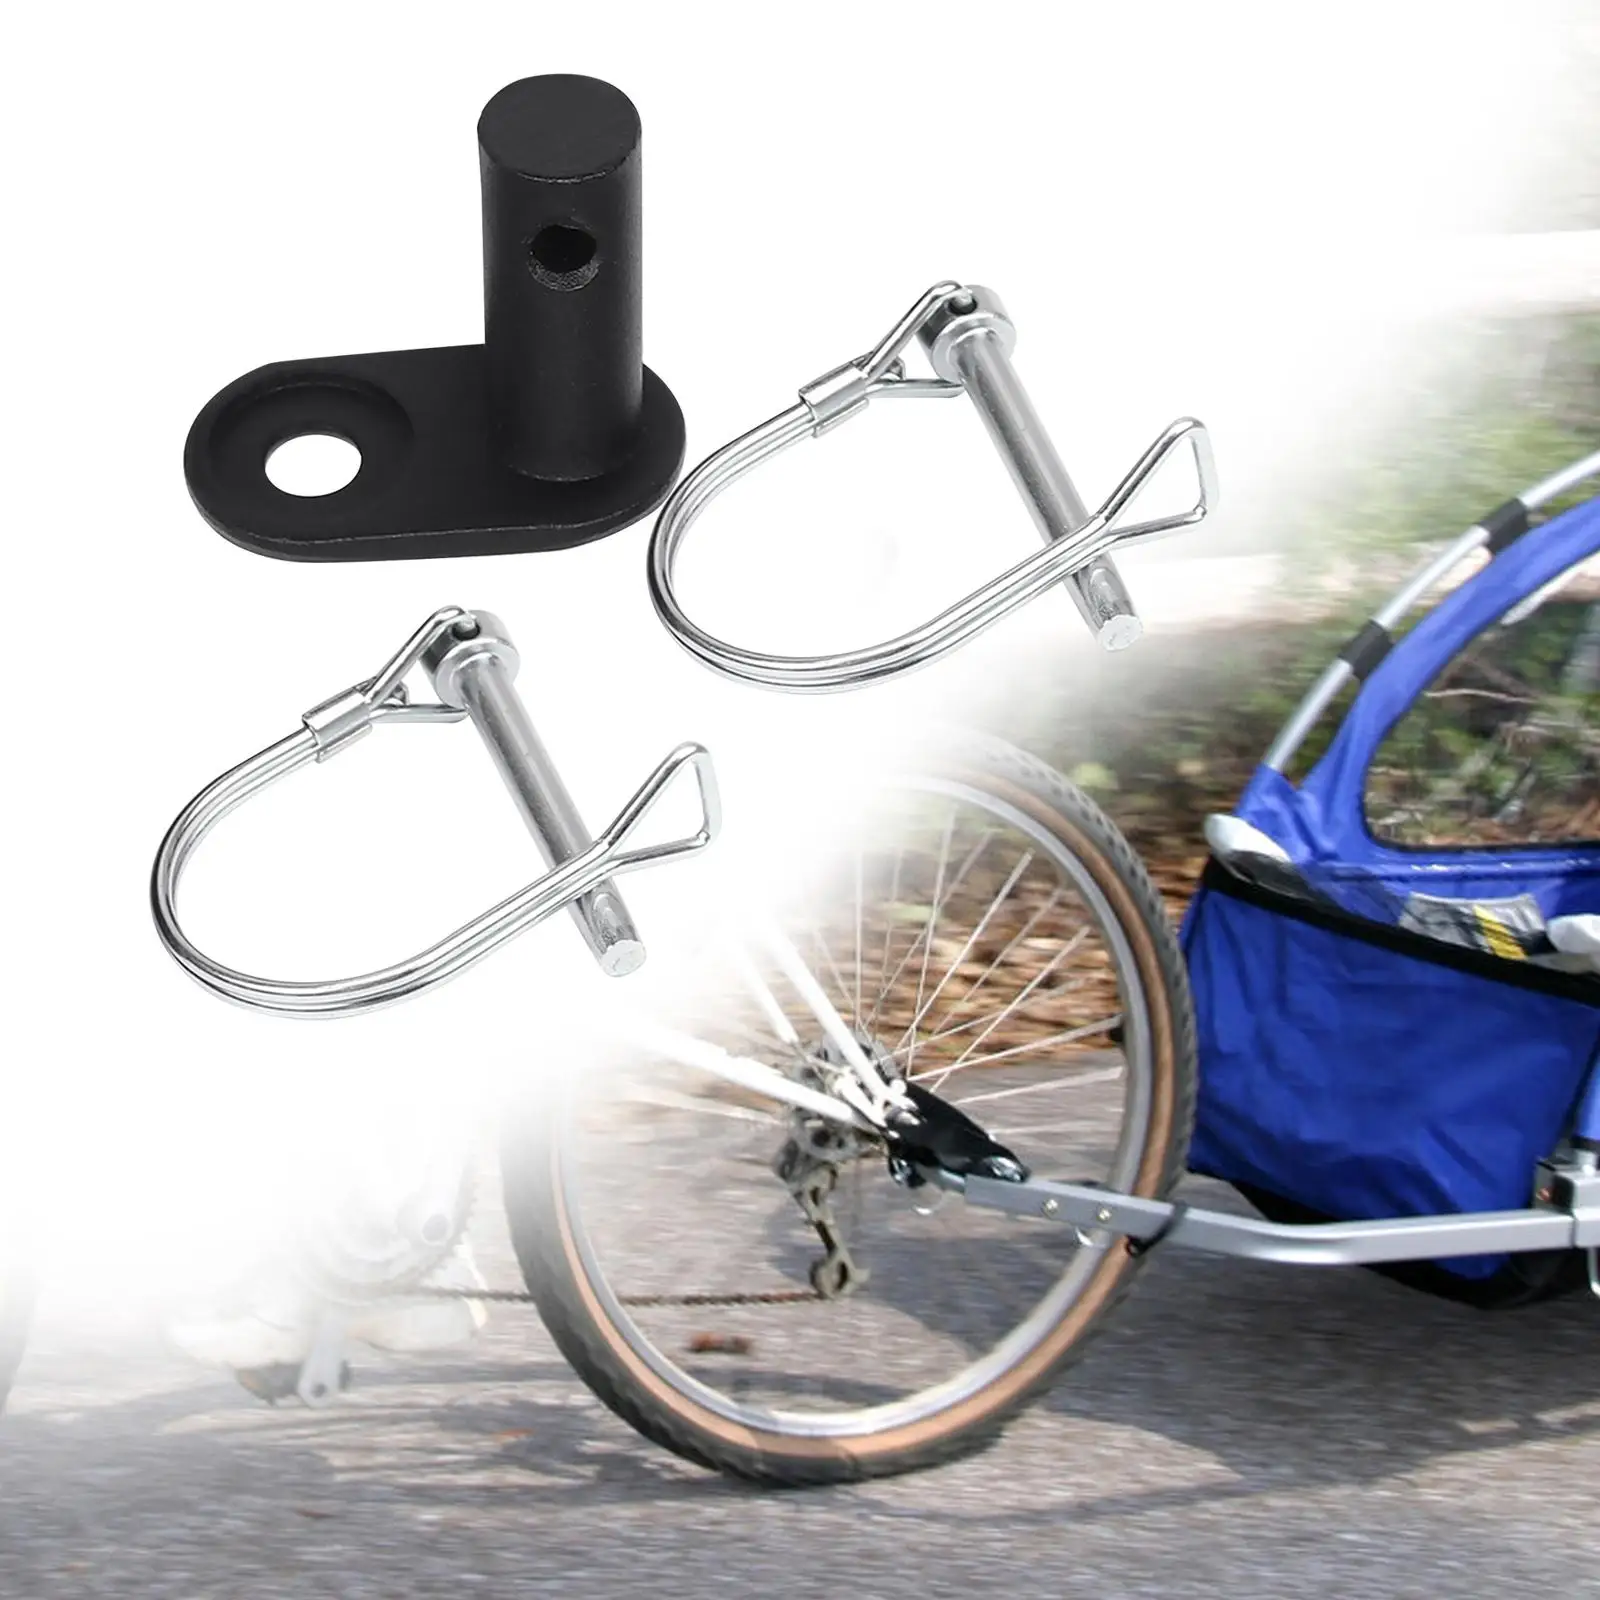 Bike Trailer Hitch Connector Universal Bike Trailer Coupler Adapter for Kids Bike Cycling Accessories